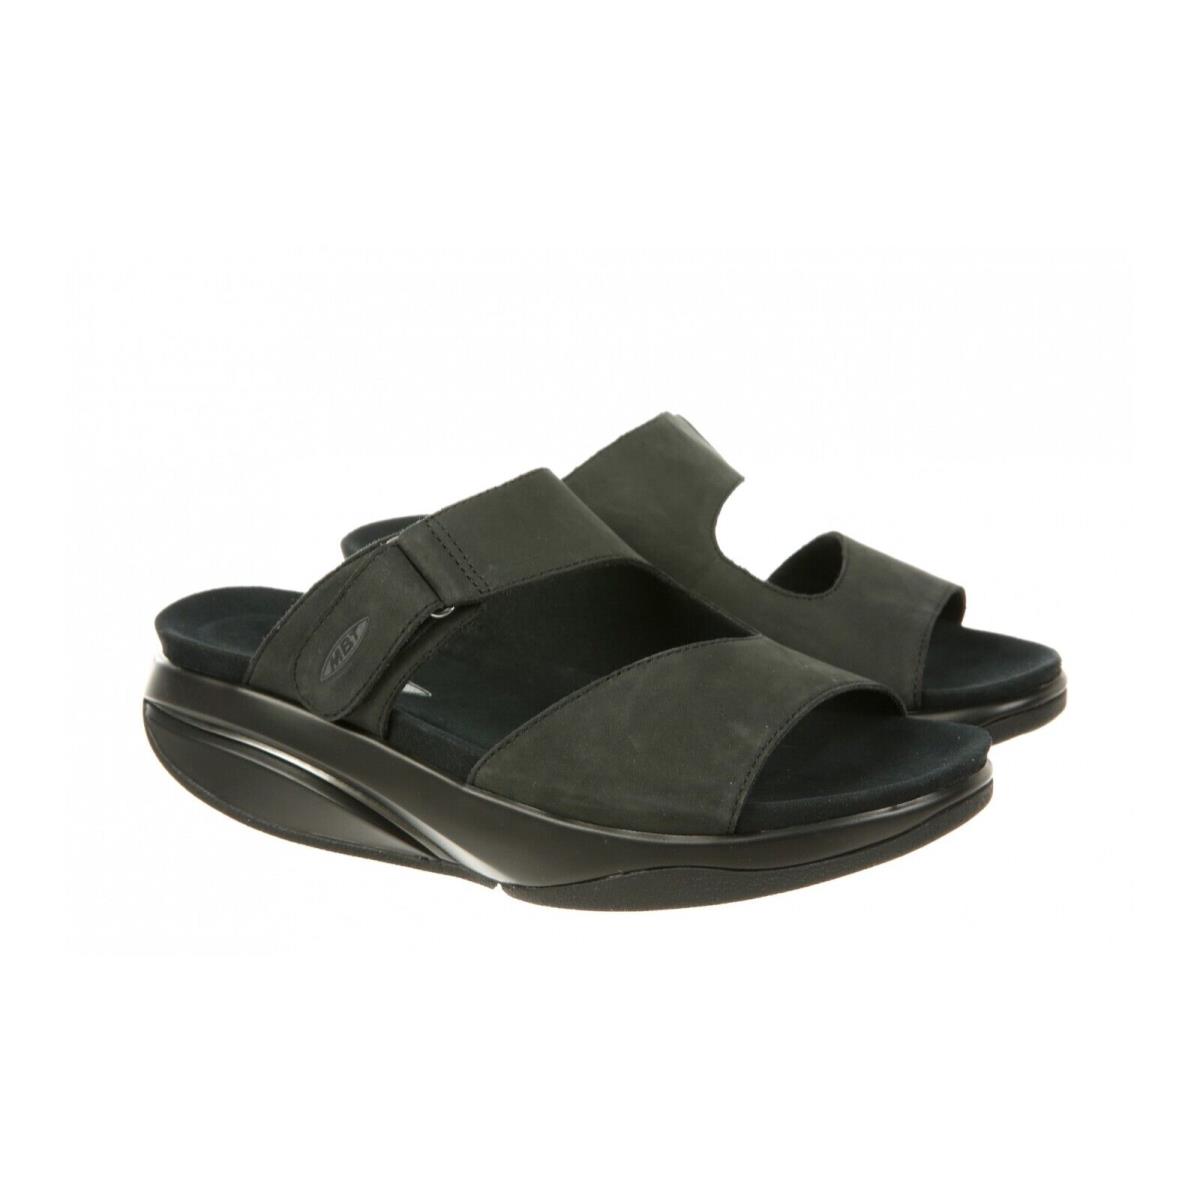 Mbt Tabia Women`s Slide Sandals Black Light Weight Slipper Inside or Go Out Black Nubuck Leather